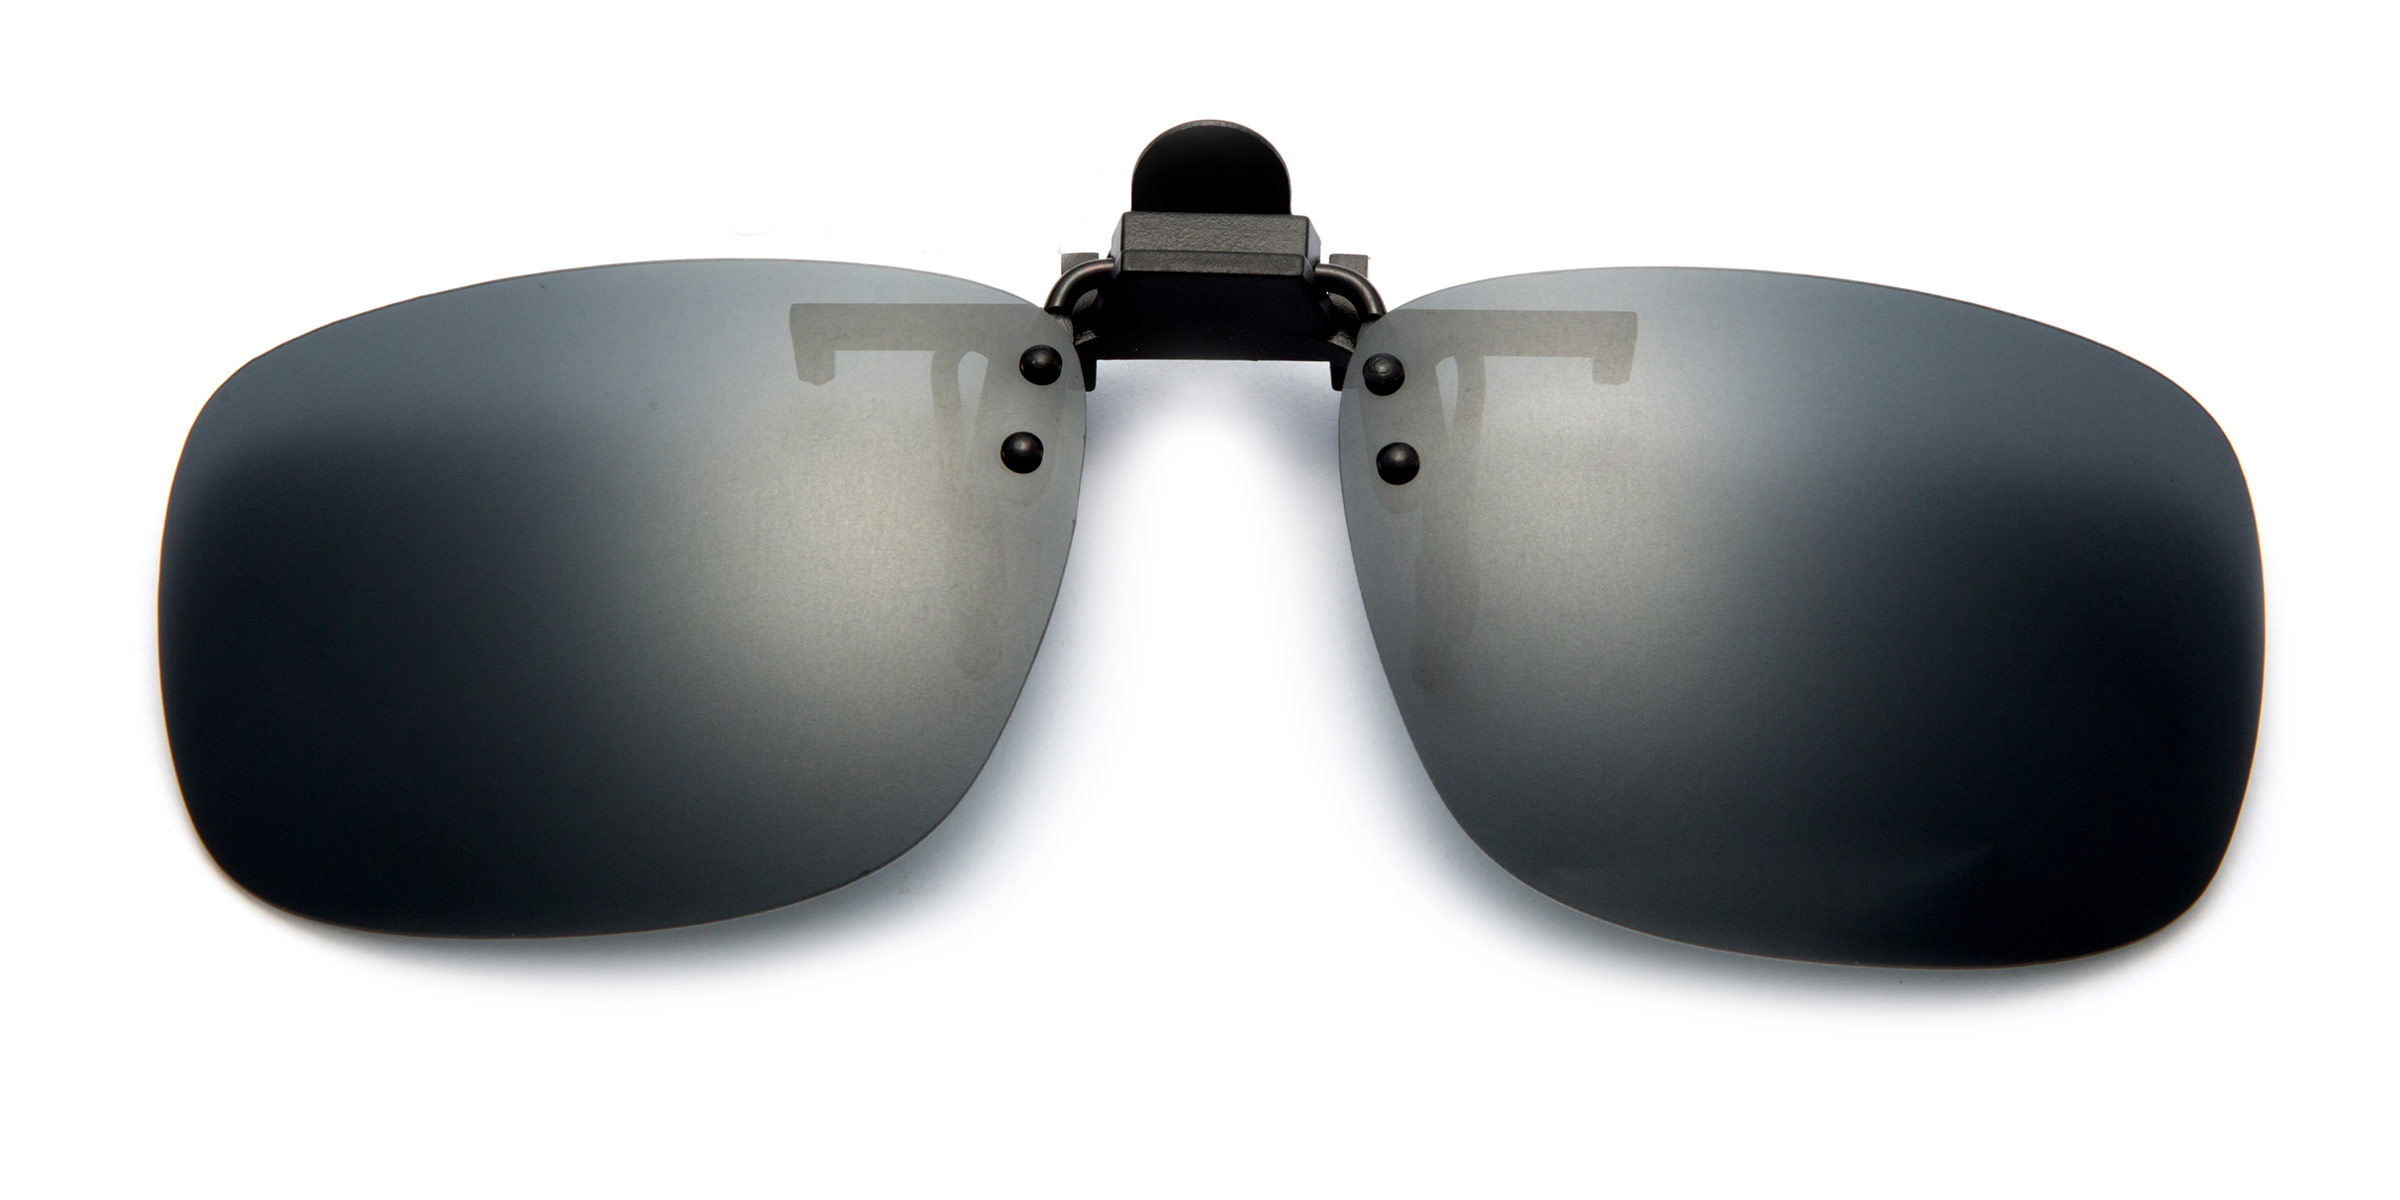 Newbee Fashion - Polarized Clip-On Flip Up Metal Clip Sunglasses Multi Purpose Flash Polarized Lenses (Glasses not included) - image 1 of 3